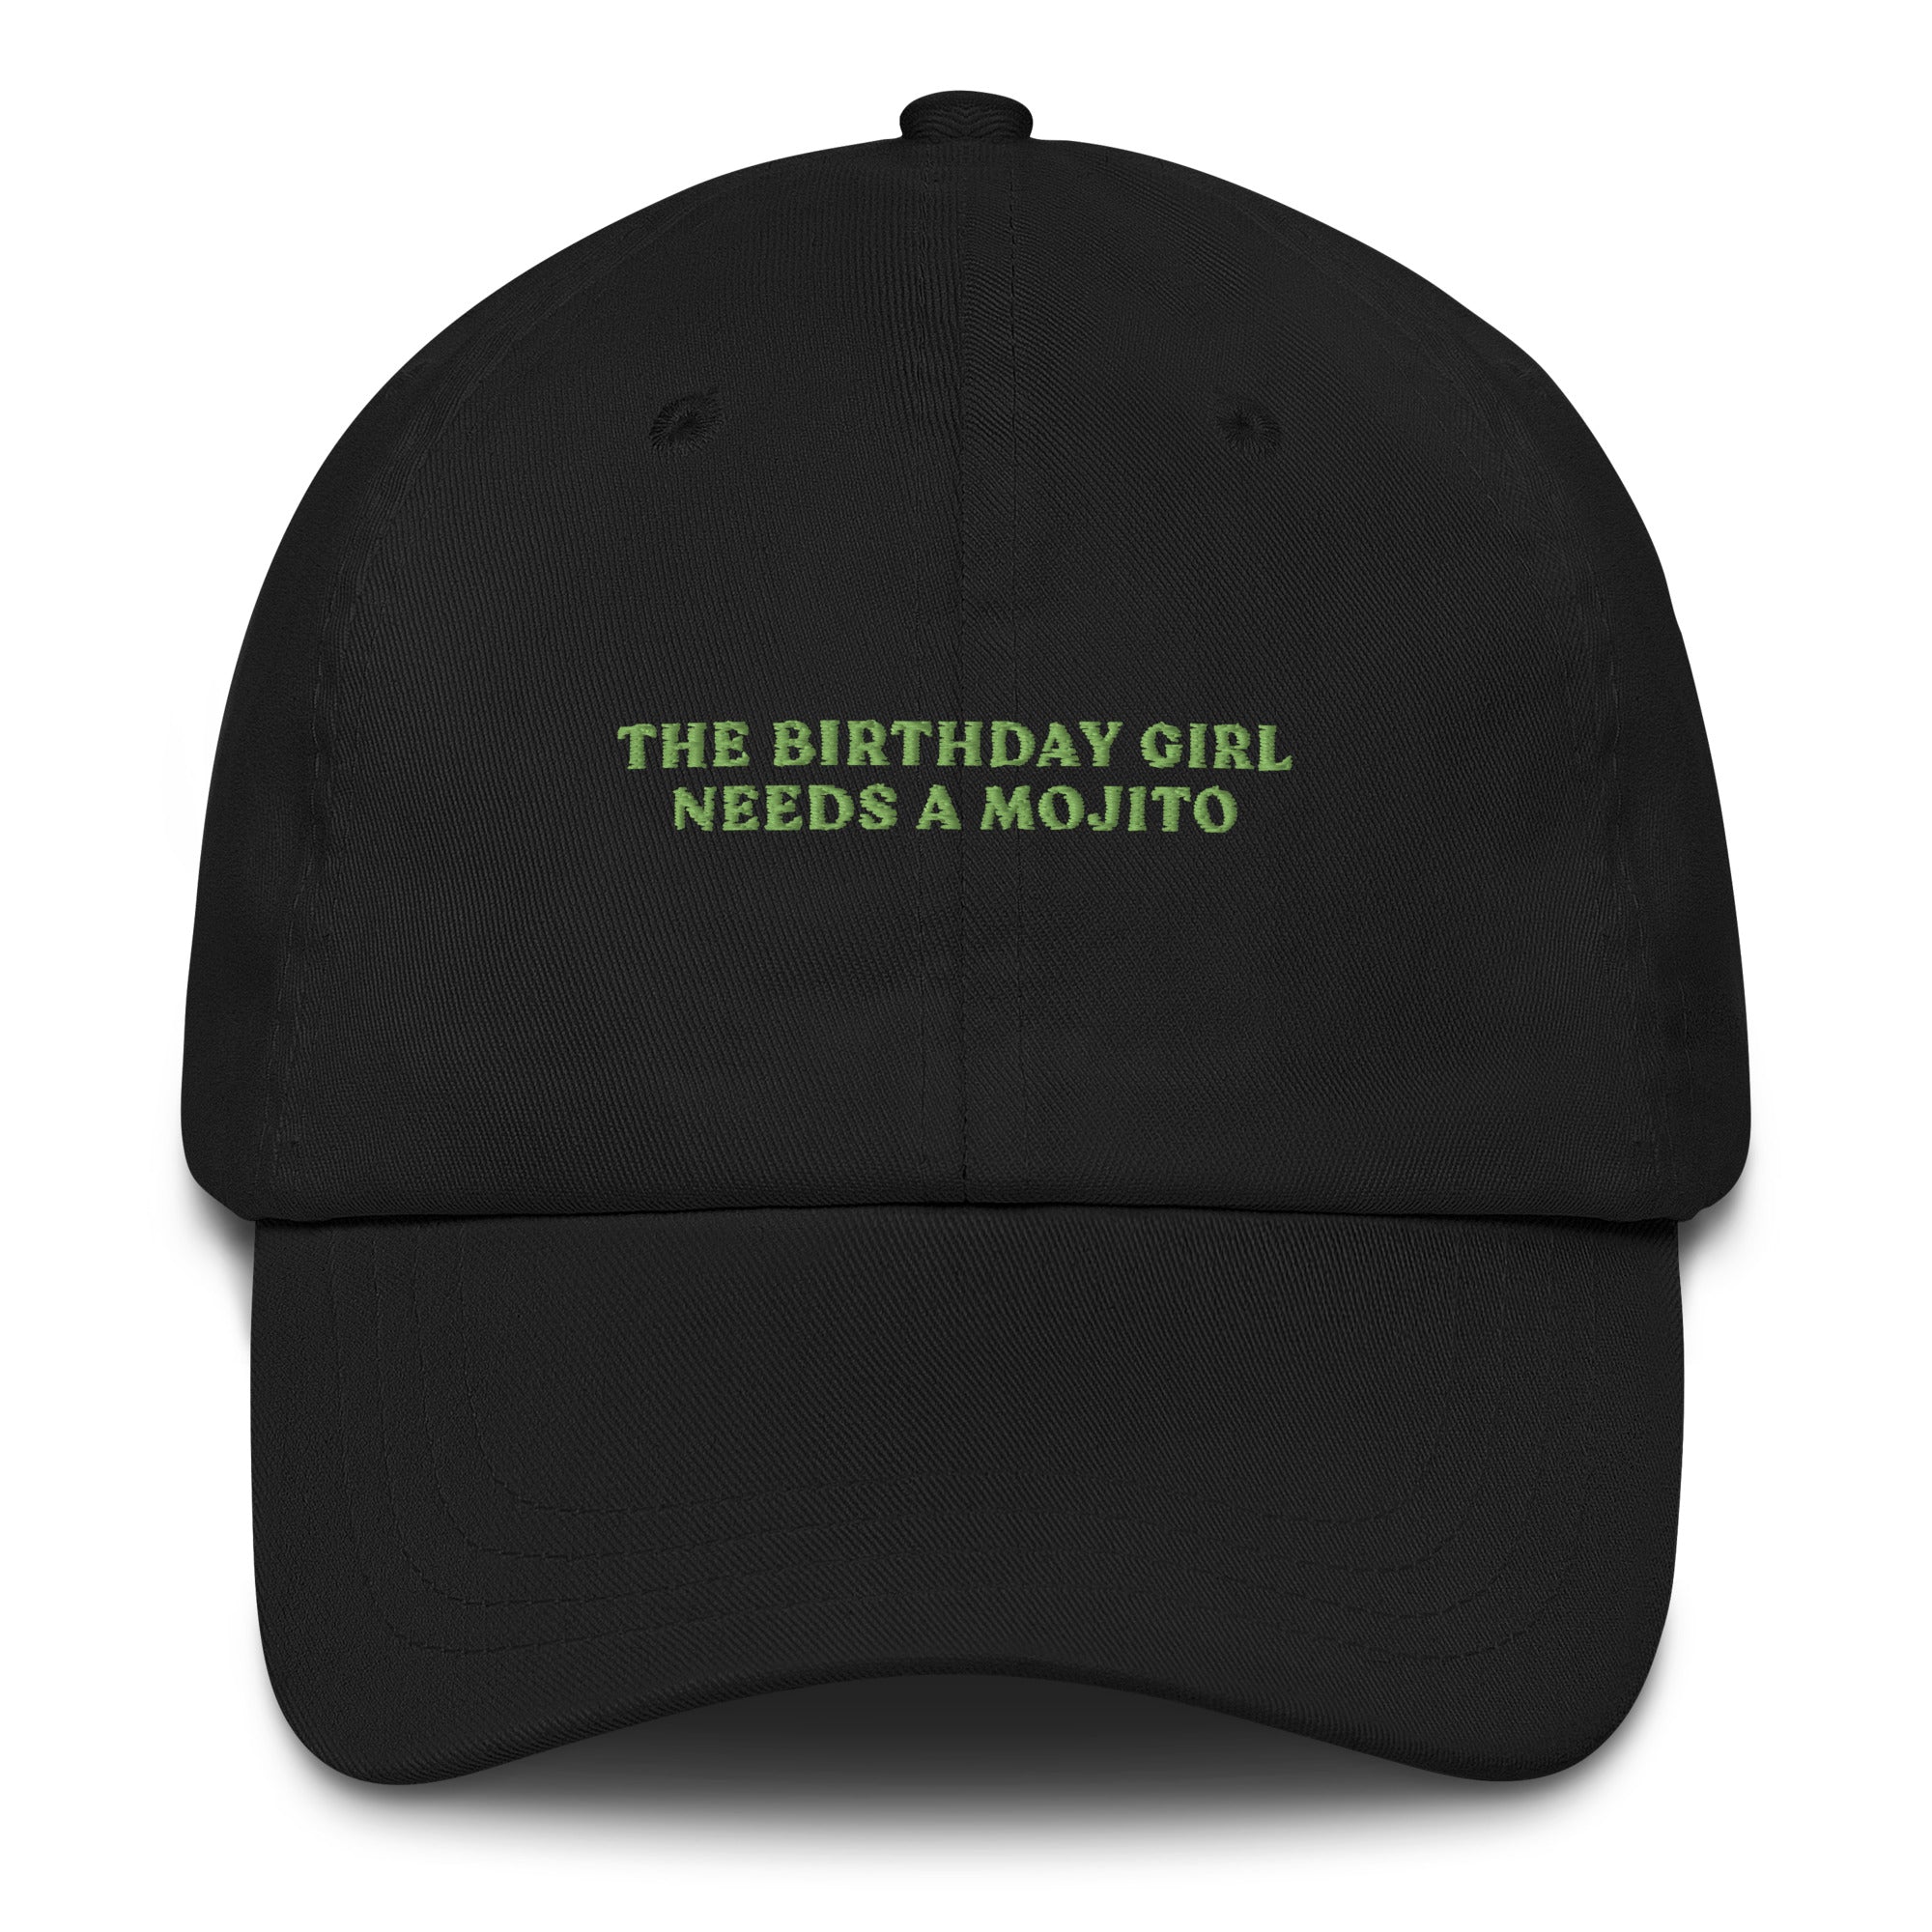 The Birthday Girl needs a Mojito - Cap